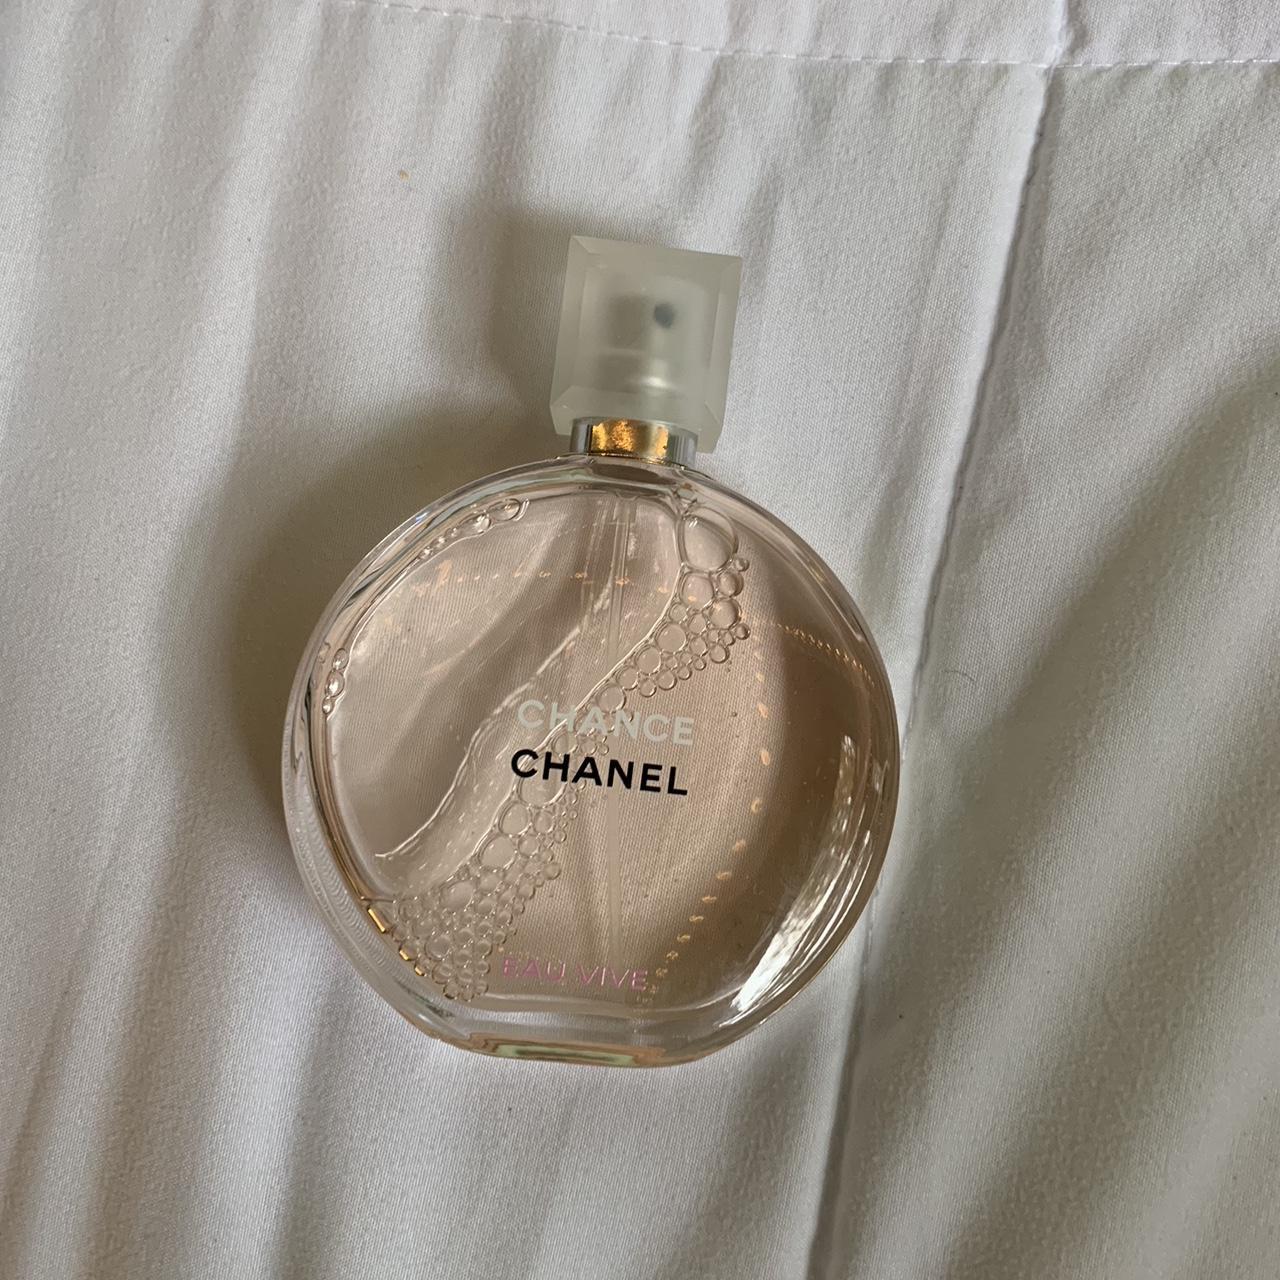 Chanel Beauty, Cosmetics